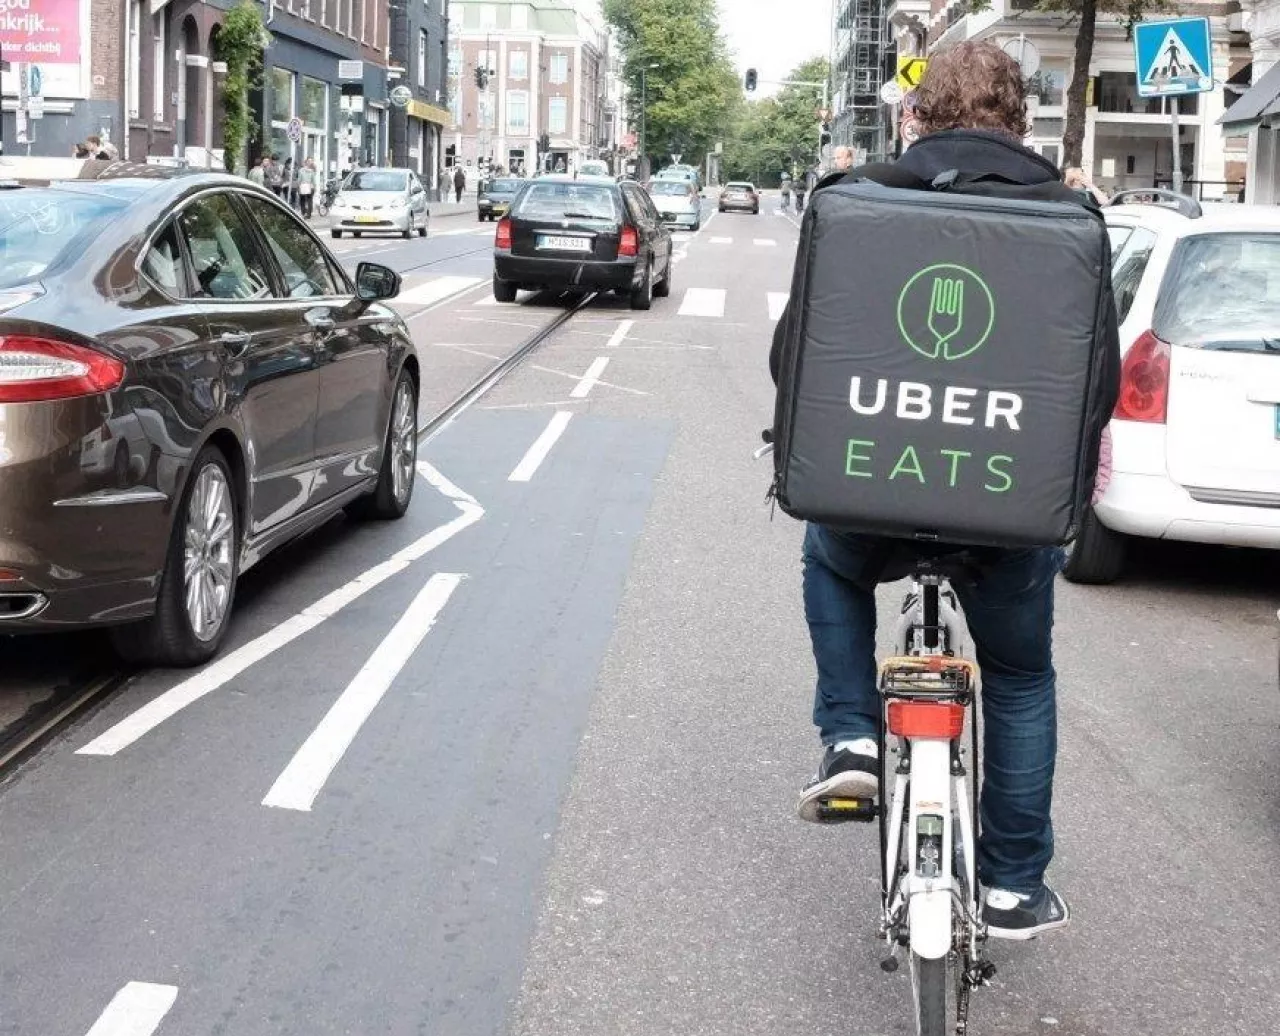 Kurier Uber Eats (Franklin Heijnen [CC BY-SA 2.0])